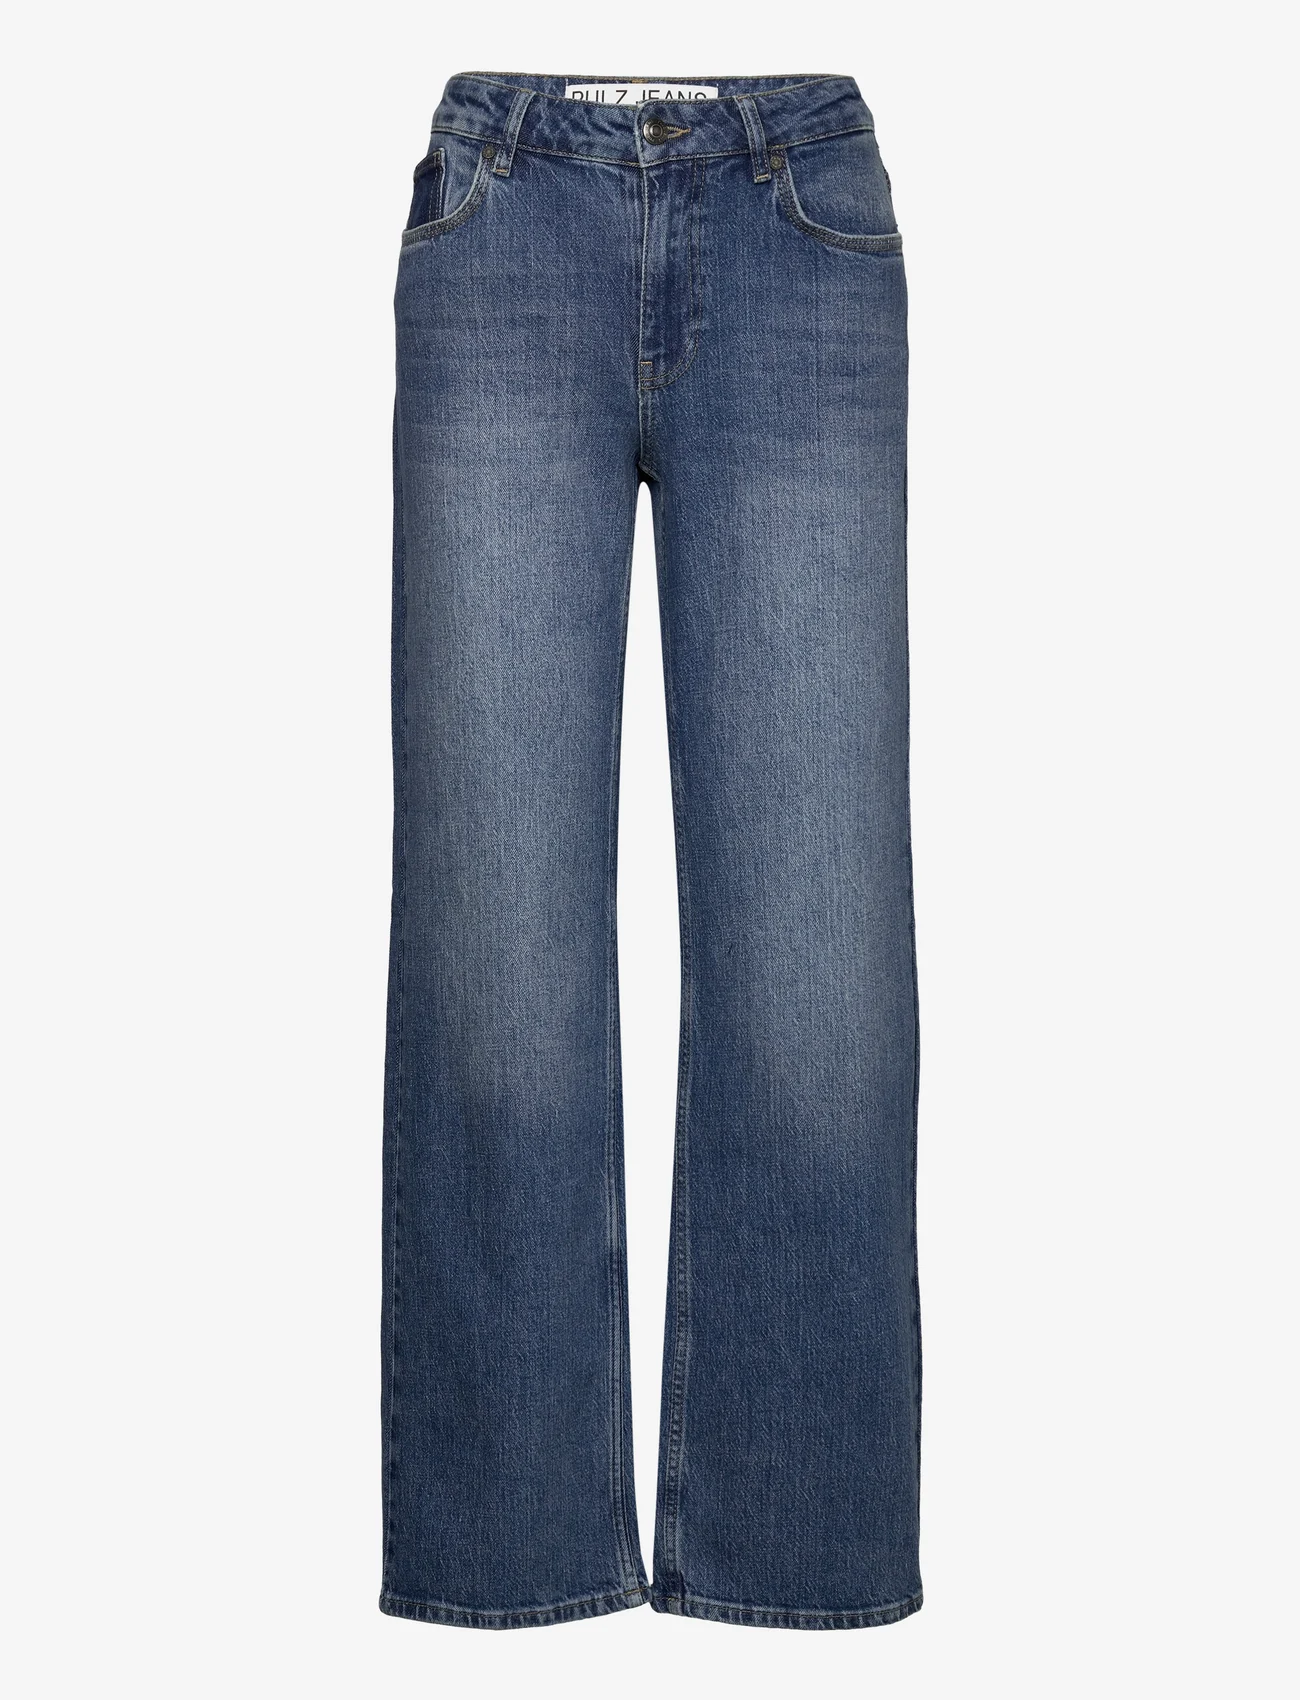 Pulz Jeans - PZVEGA HW Jeans Wide Leg - vide jeans - medium blue denim - 0